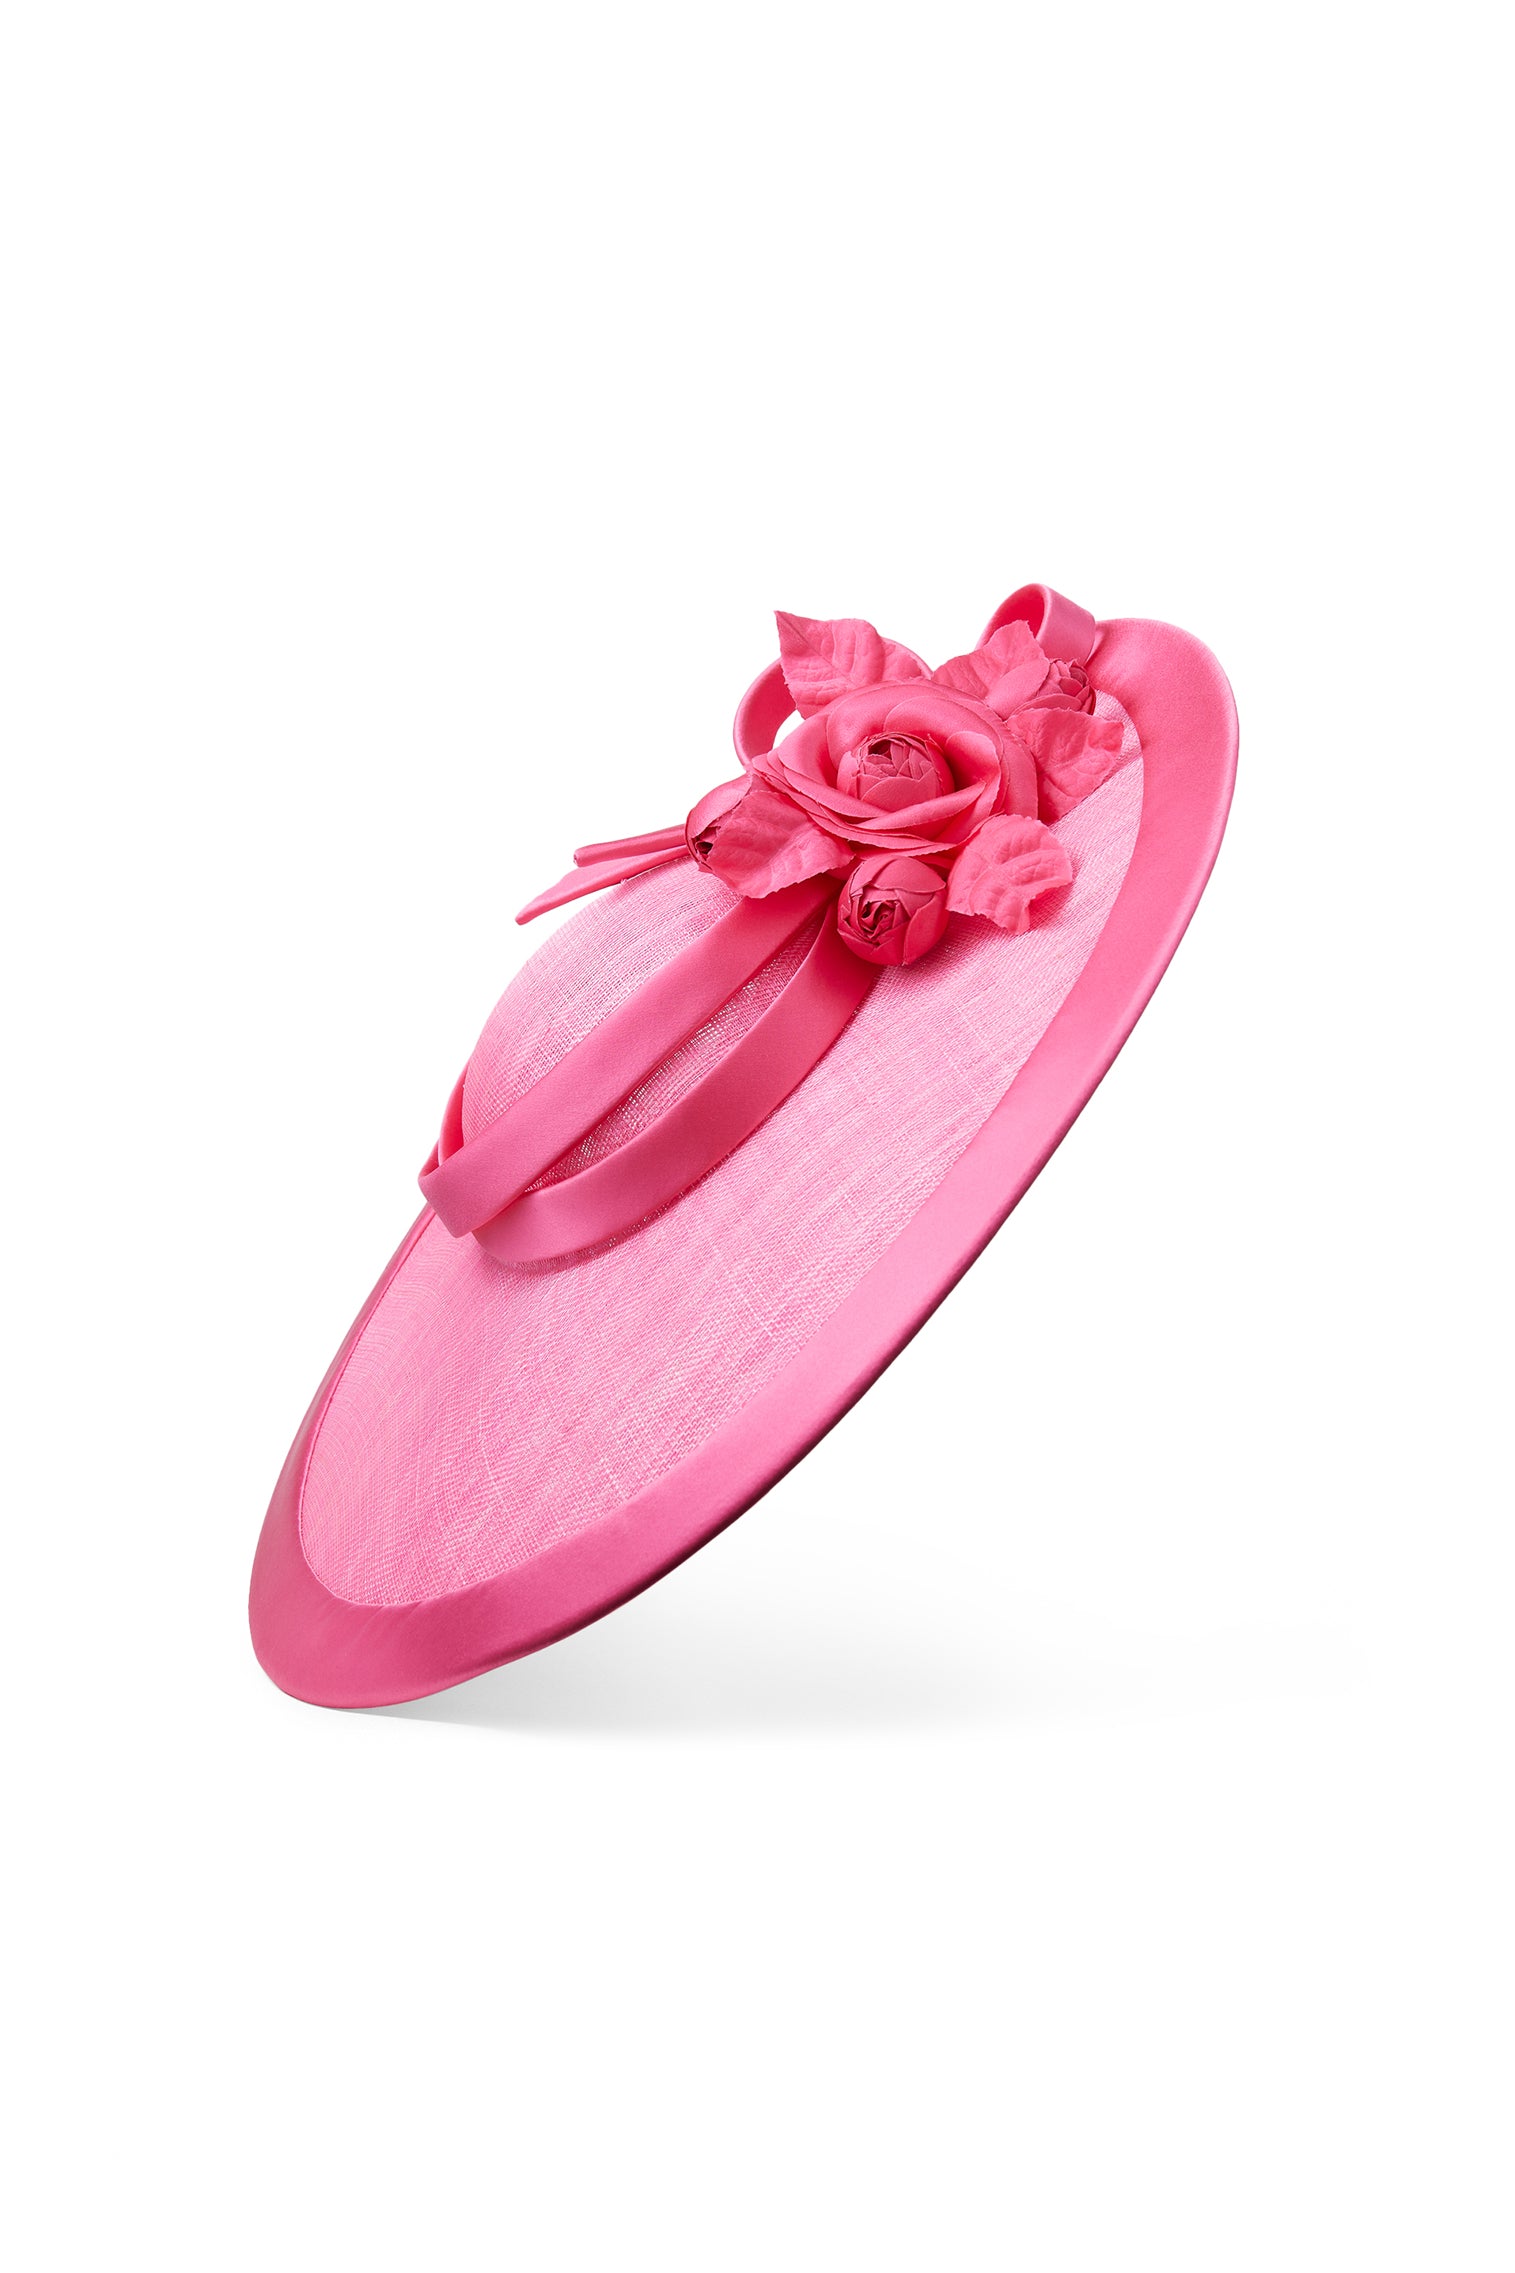 Jasmine Bright Pink Slice Hat - New Season Hat Collection - Lock & Co. Hatters London UK